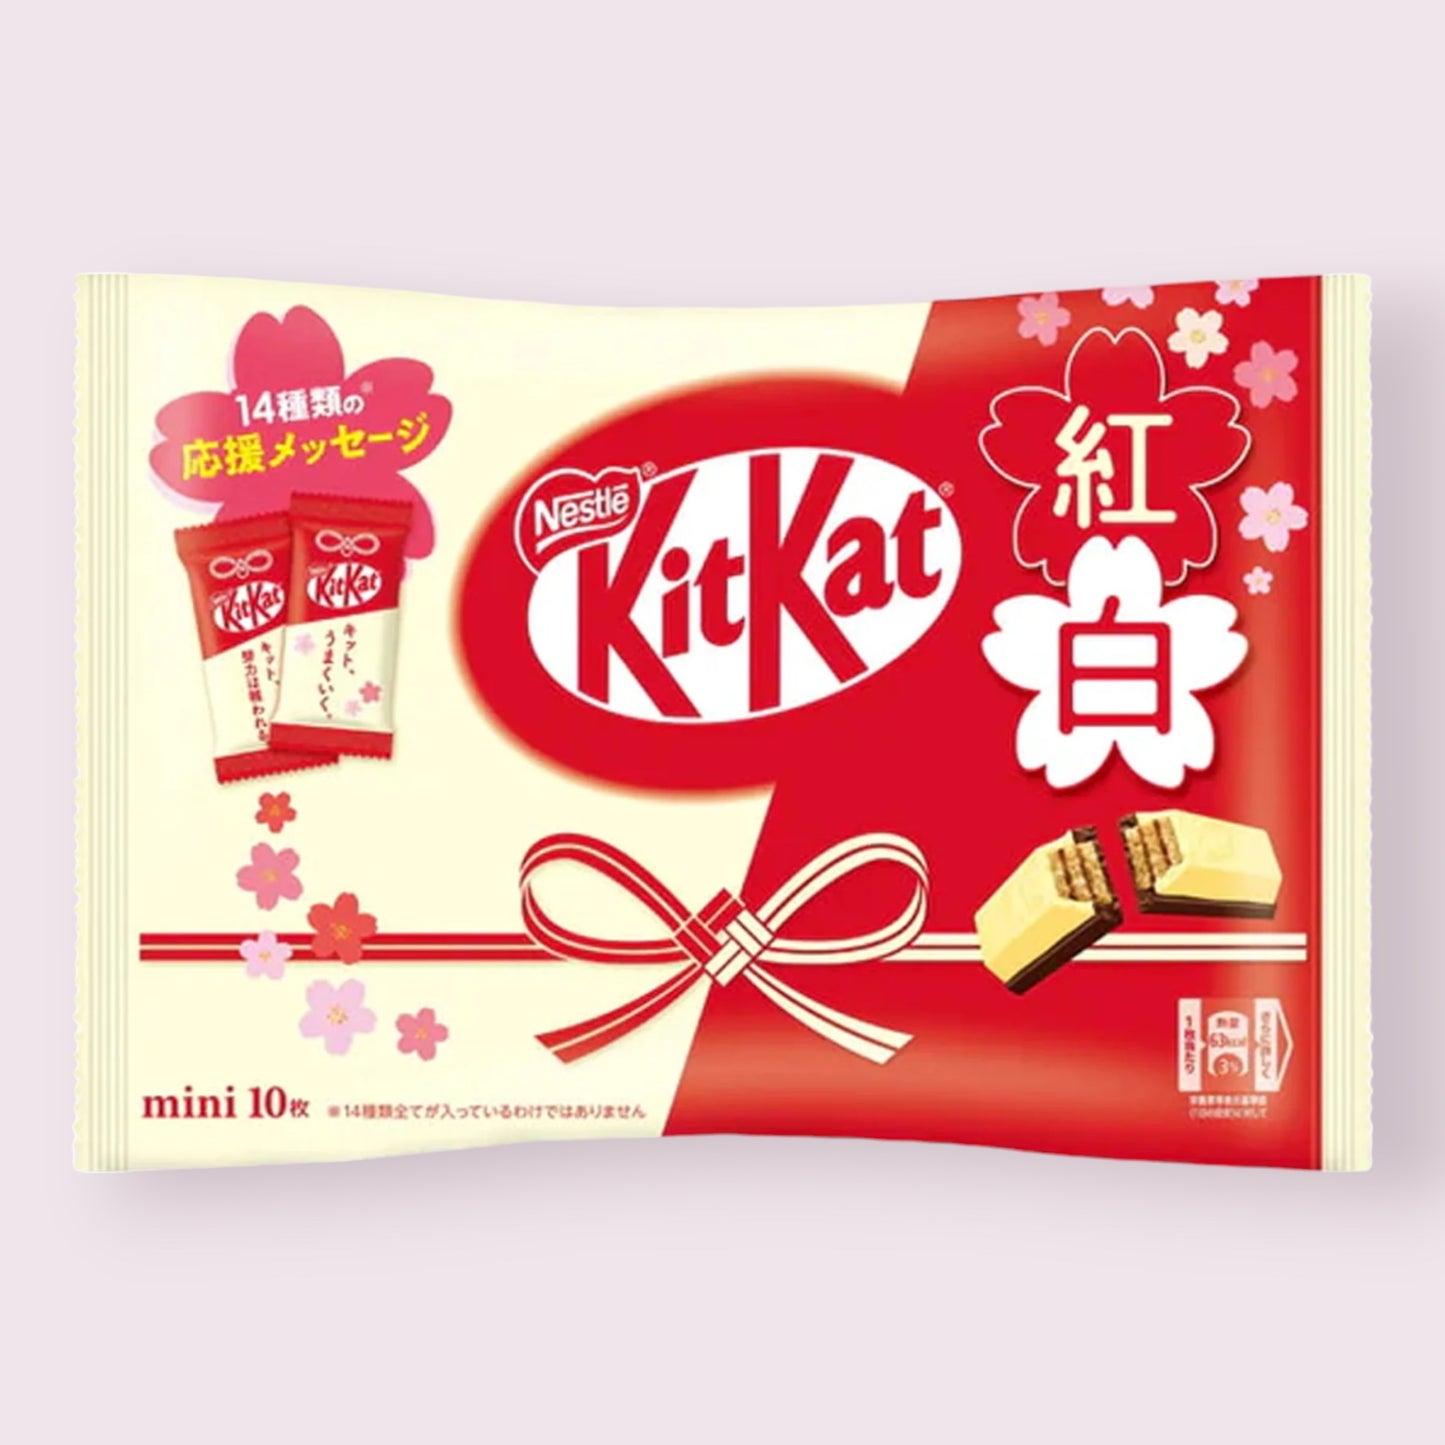 Kit Kat White & Dark Chocolate Duo Bag  Pixie Candy Shoppe   